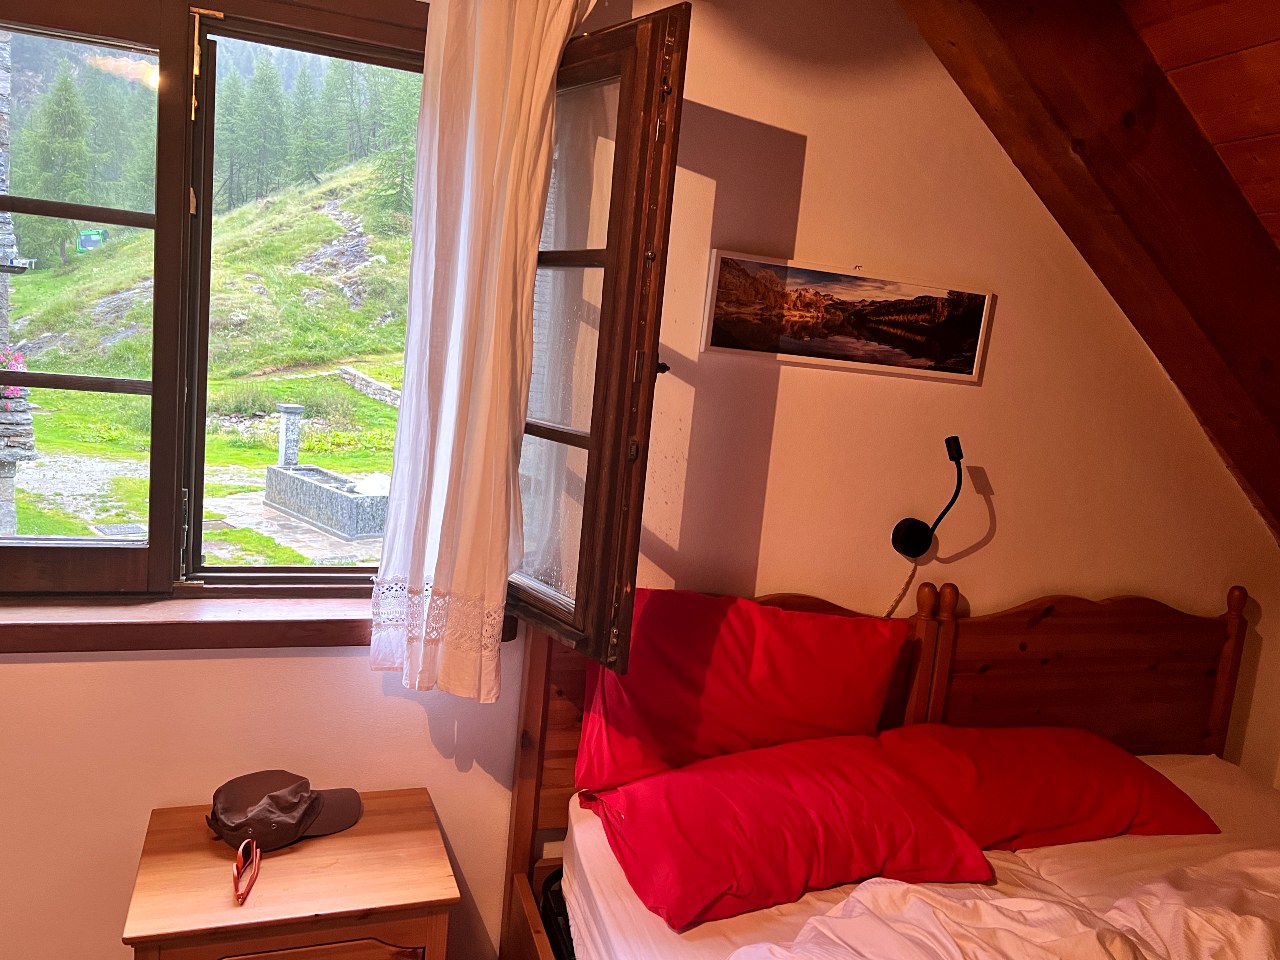 Rooms at Agriturismo Alpe Crampiolo